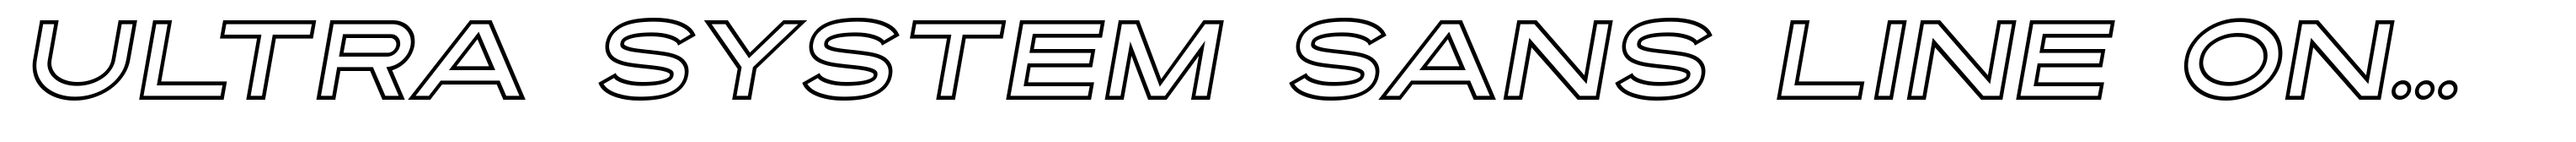 Ultra System Sans Line One Italic